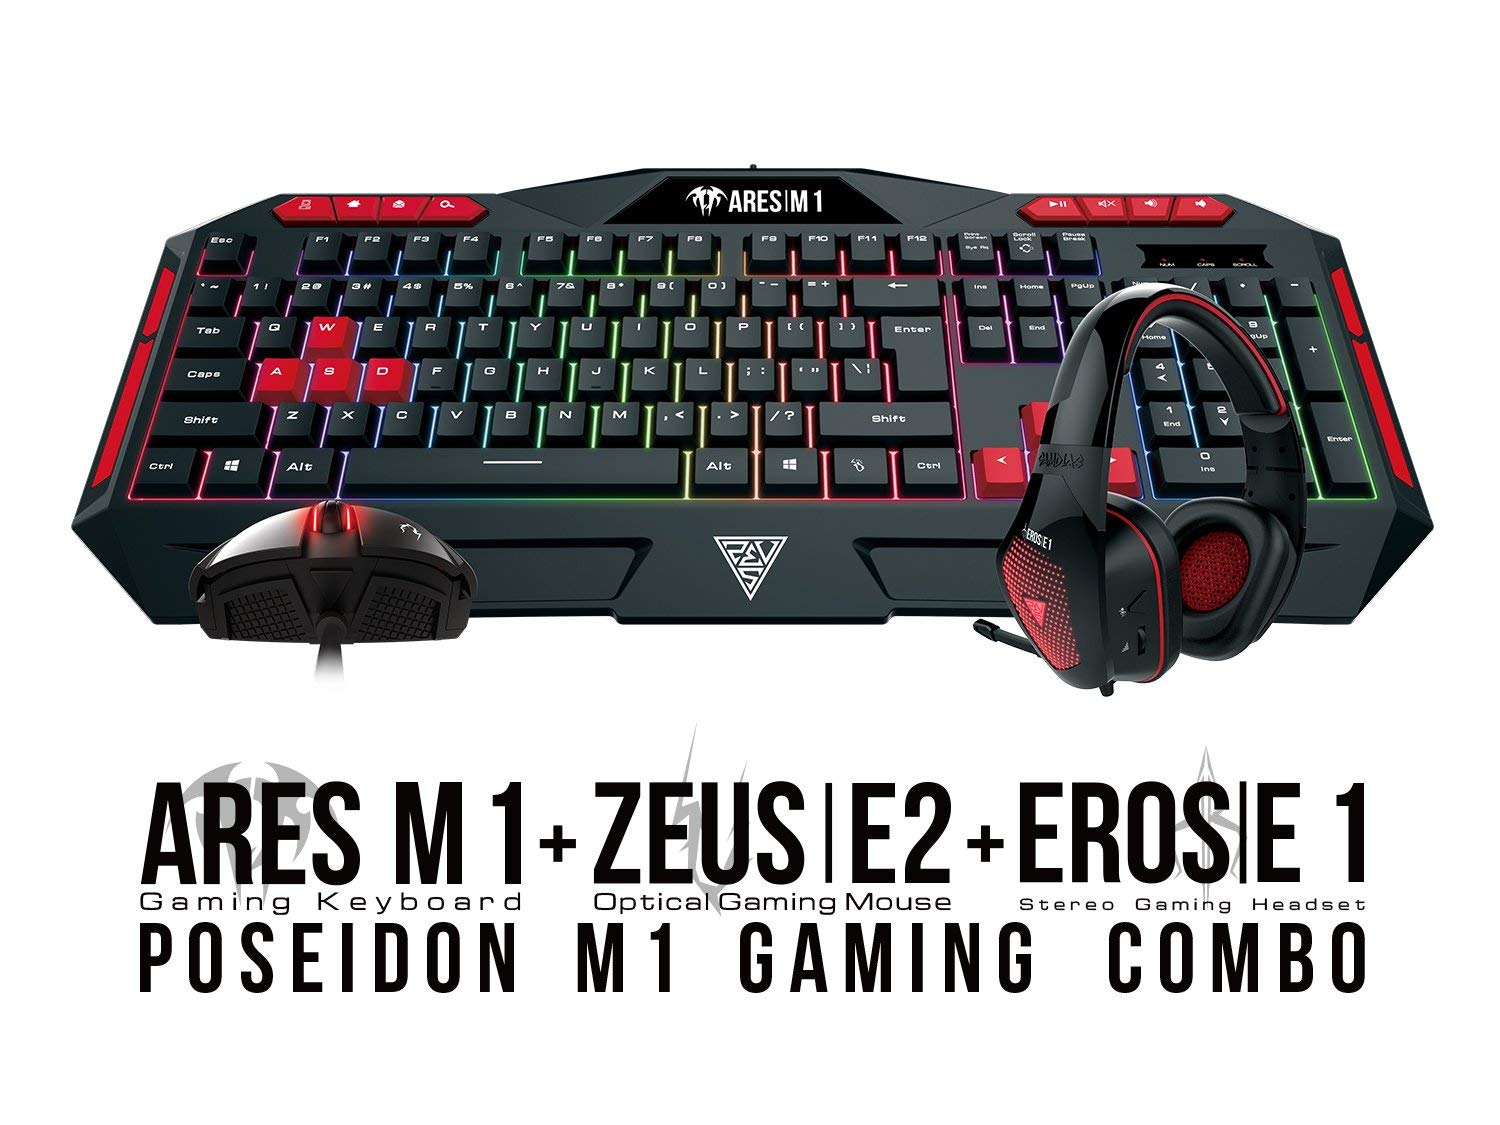 GAMDIAS Poseidon M1 Gaming Combo, Ares M1 Membrane Keyboard with Zeus E2 optical Mouse and Eros E1 Headset (Poseidon M1)